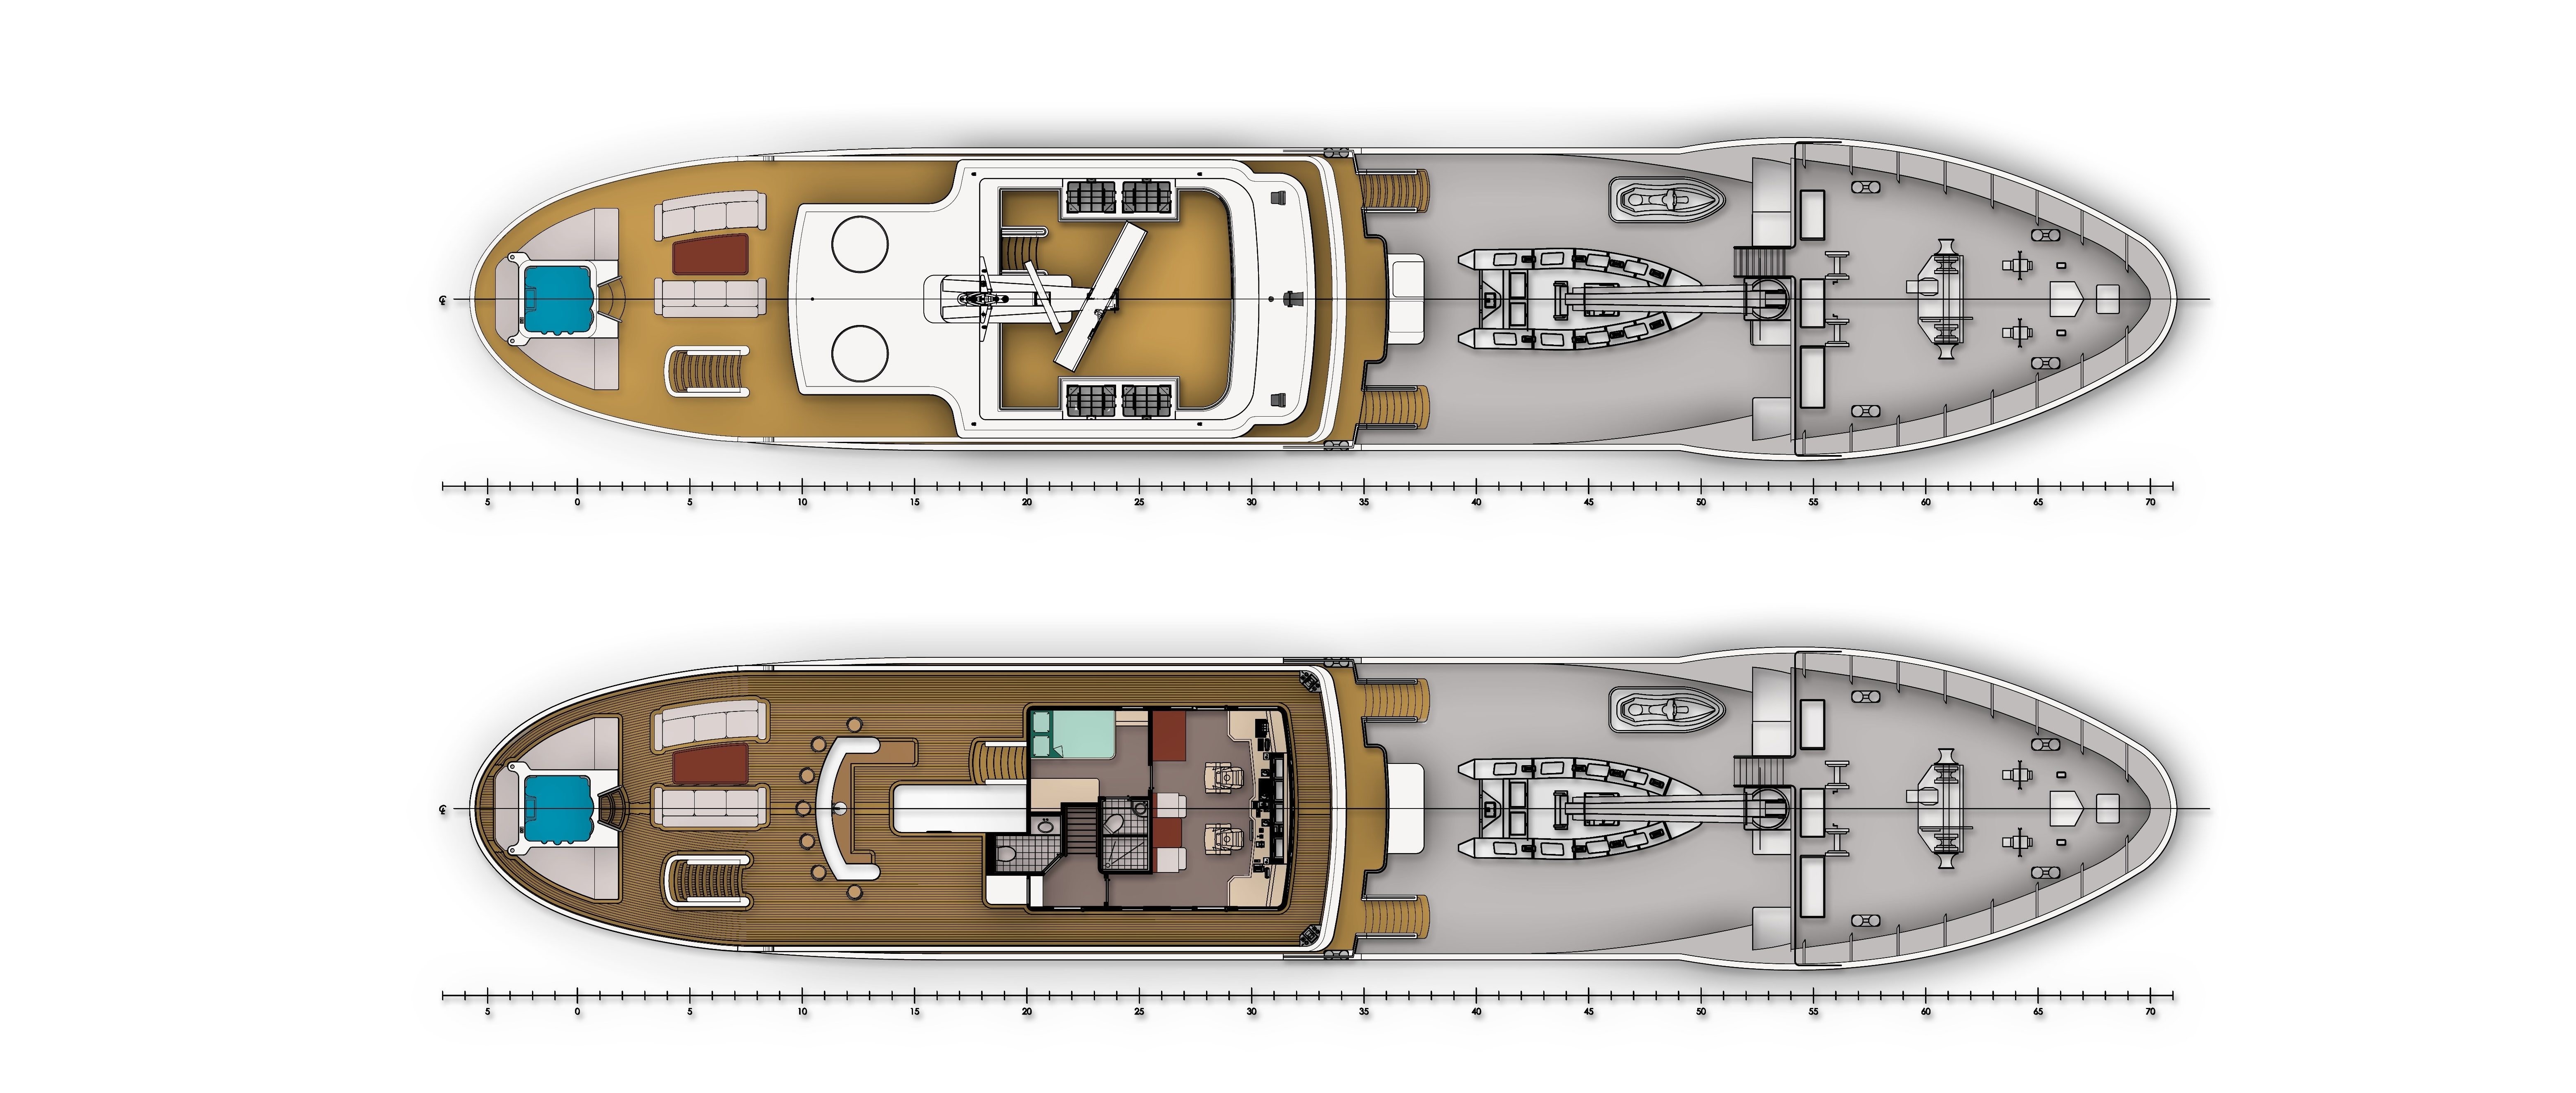 The 42m Yacht ANDA